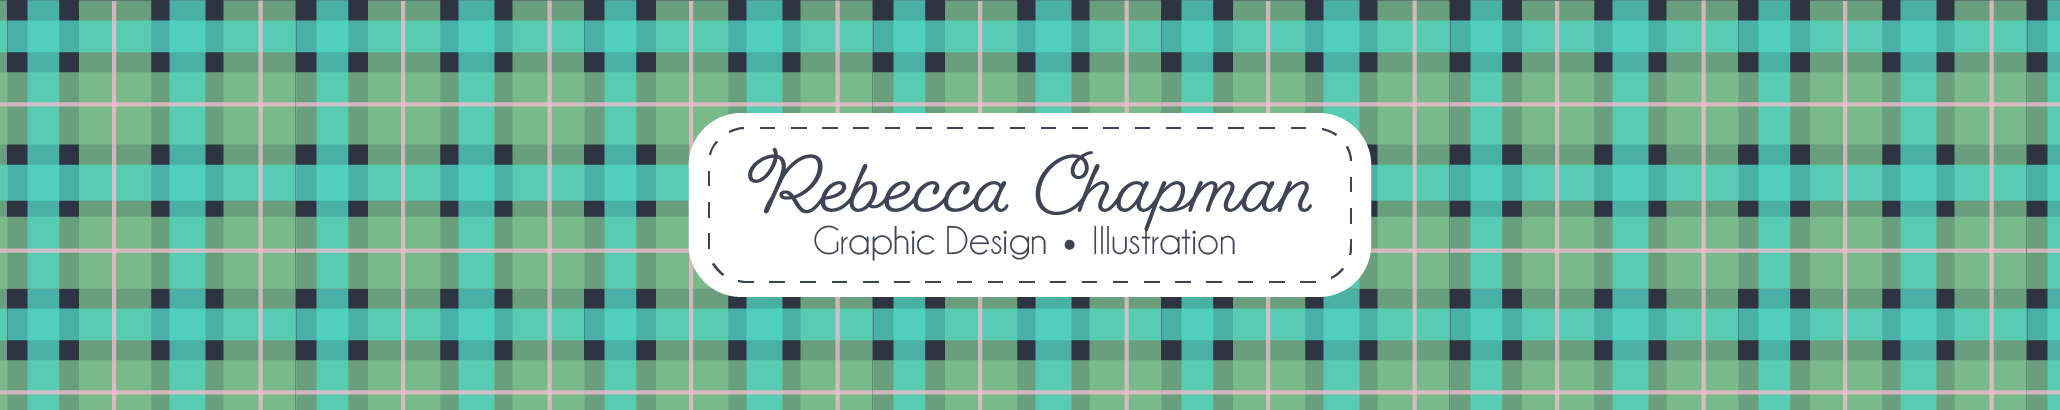 Profil-Banner von Rebecca Chapman